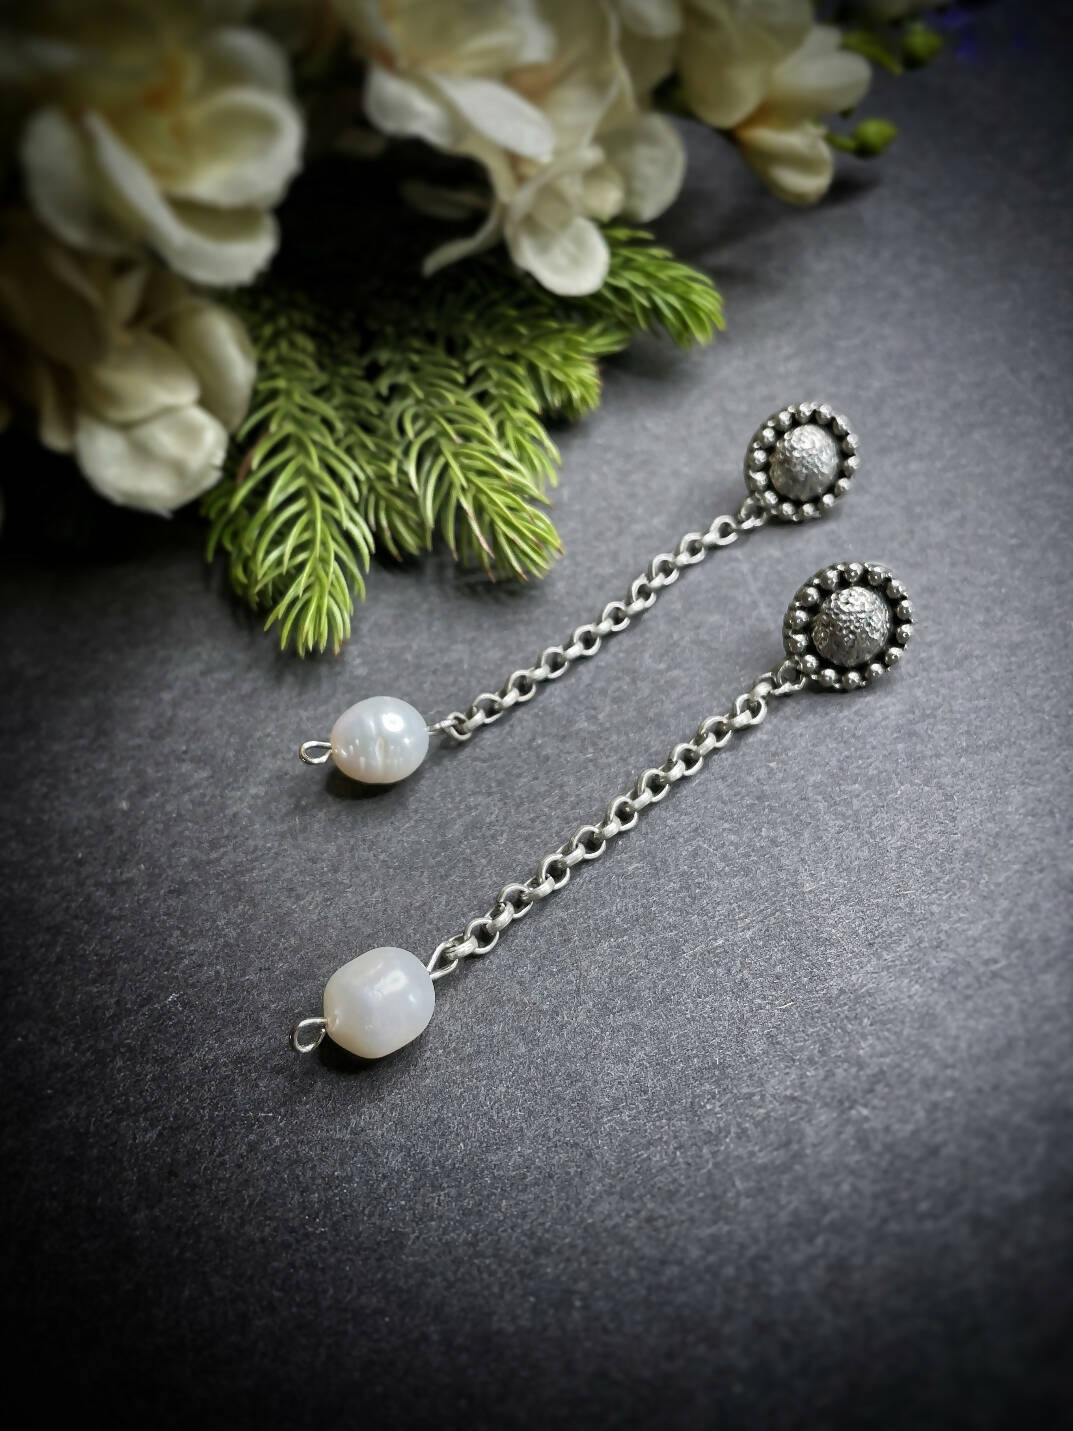 Handmade Brass Oxidized Silver look alike Minimalistic Dangler Earrings with Fresh water Pearls - AAVA